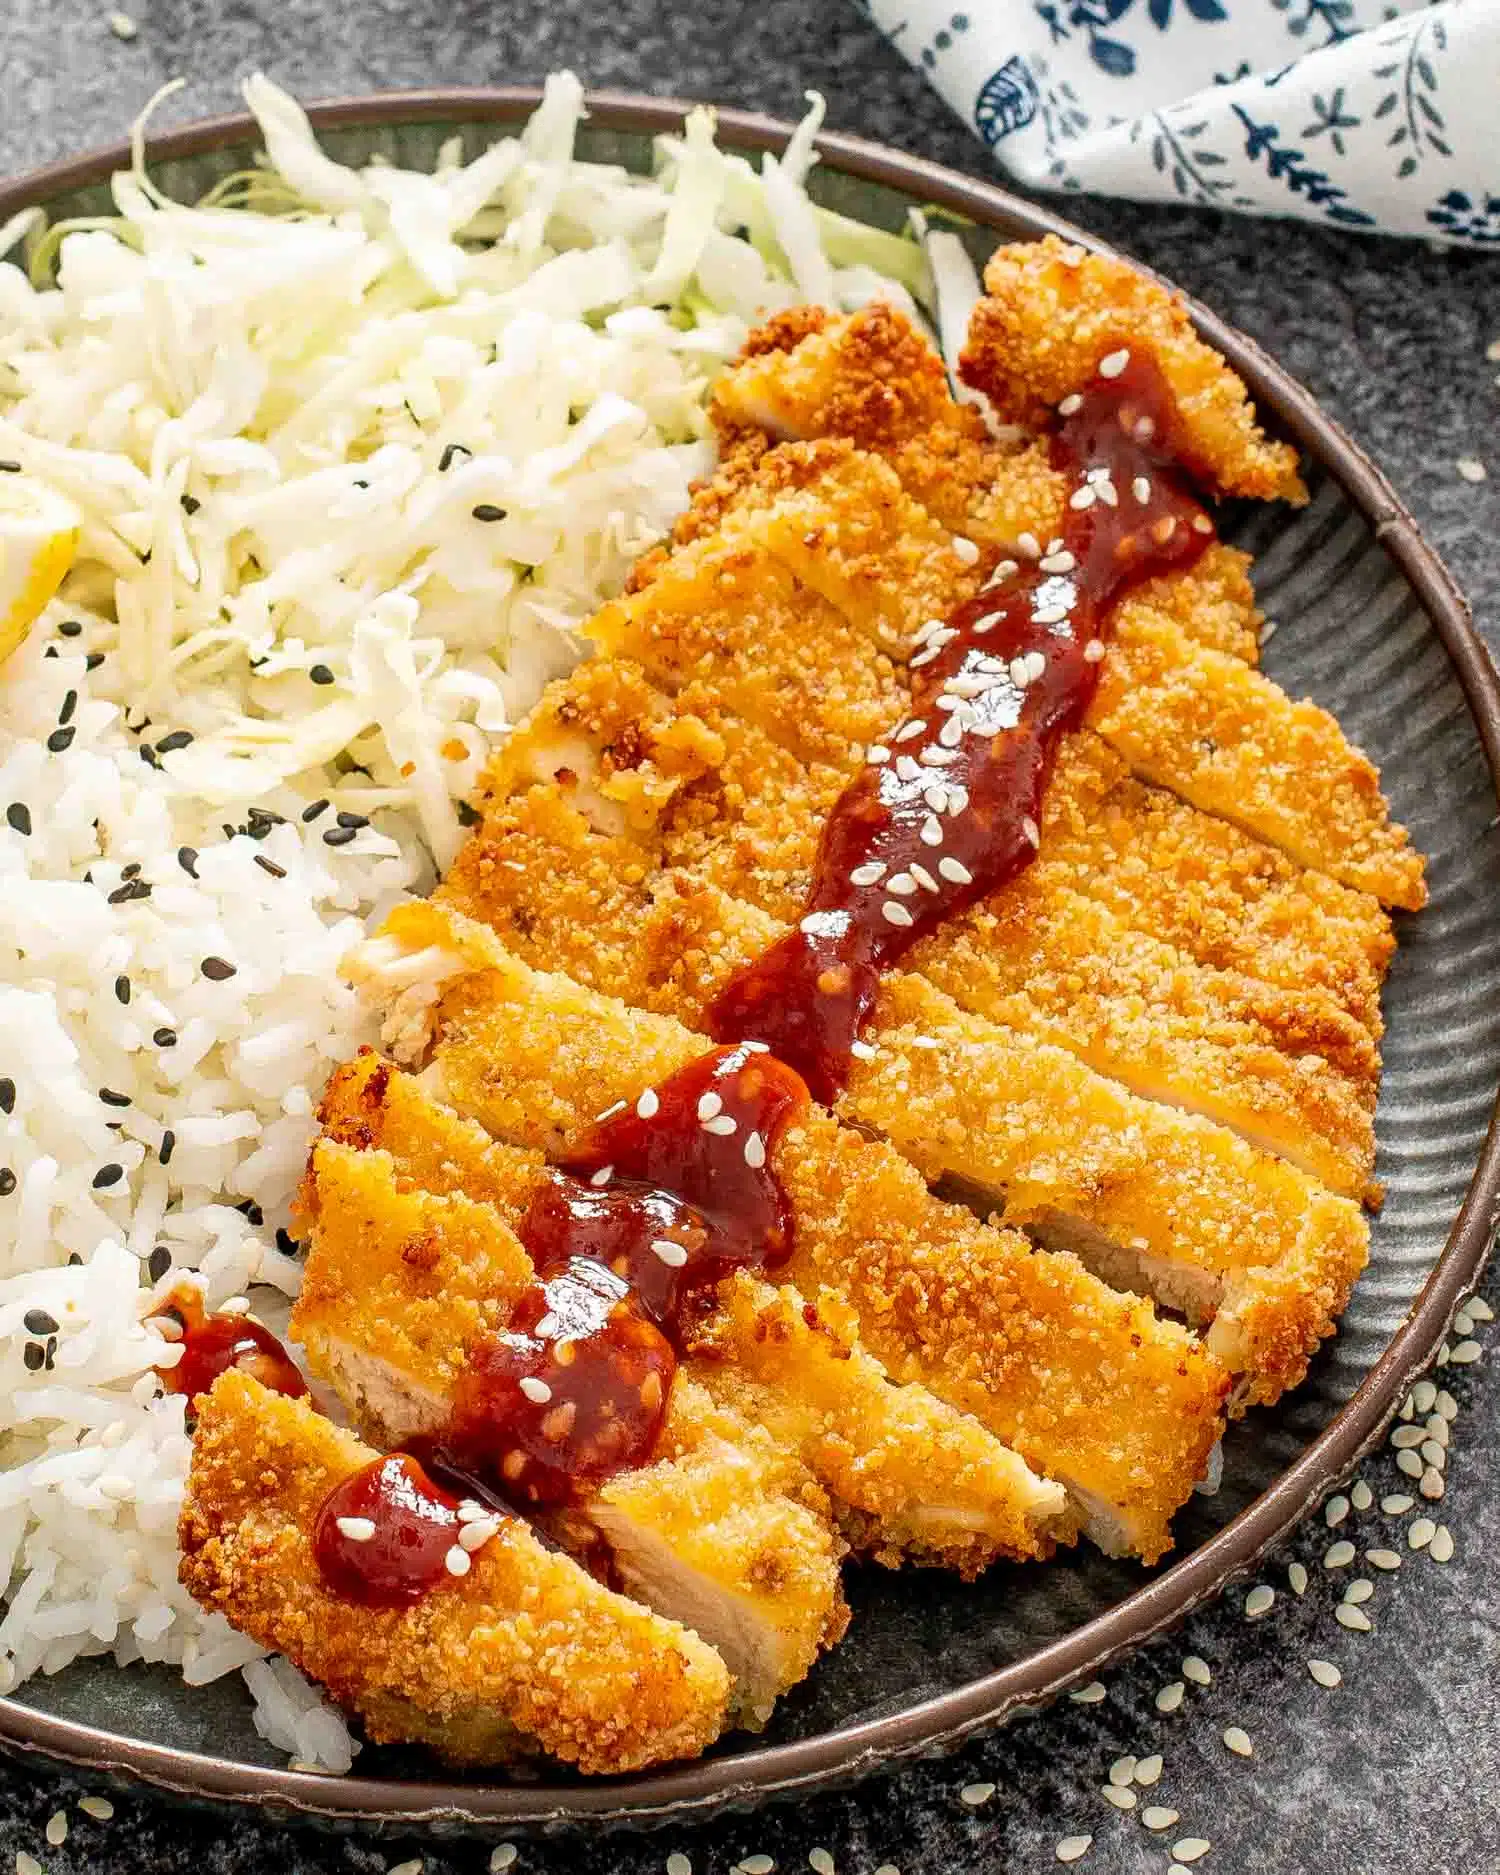 sliced up chicken katsu on a plate with rice and tonkatsu sauce.